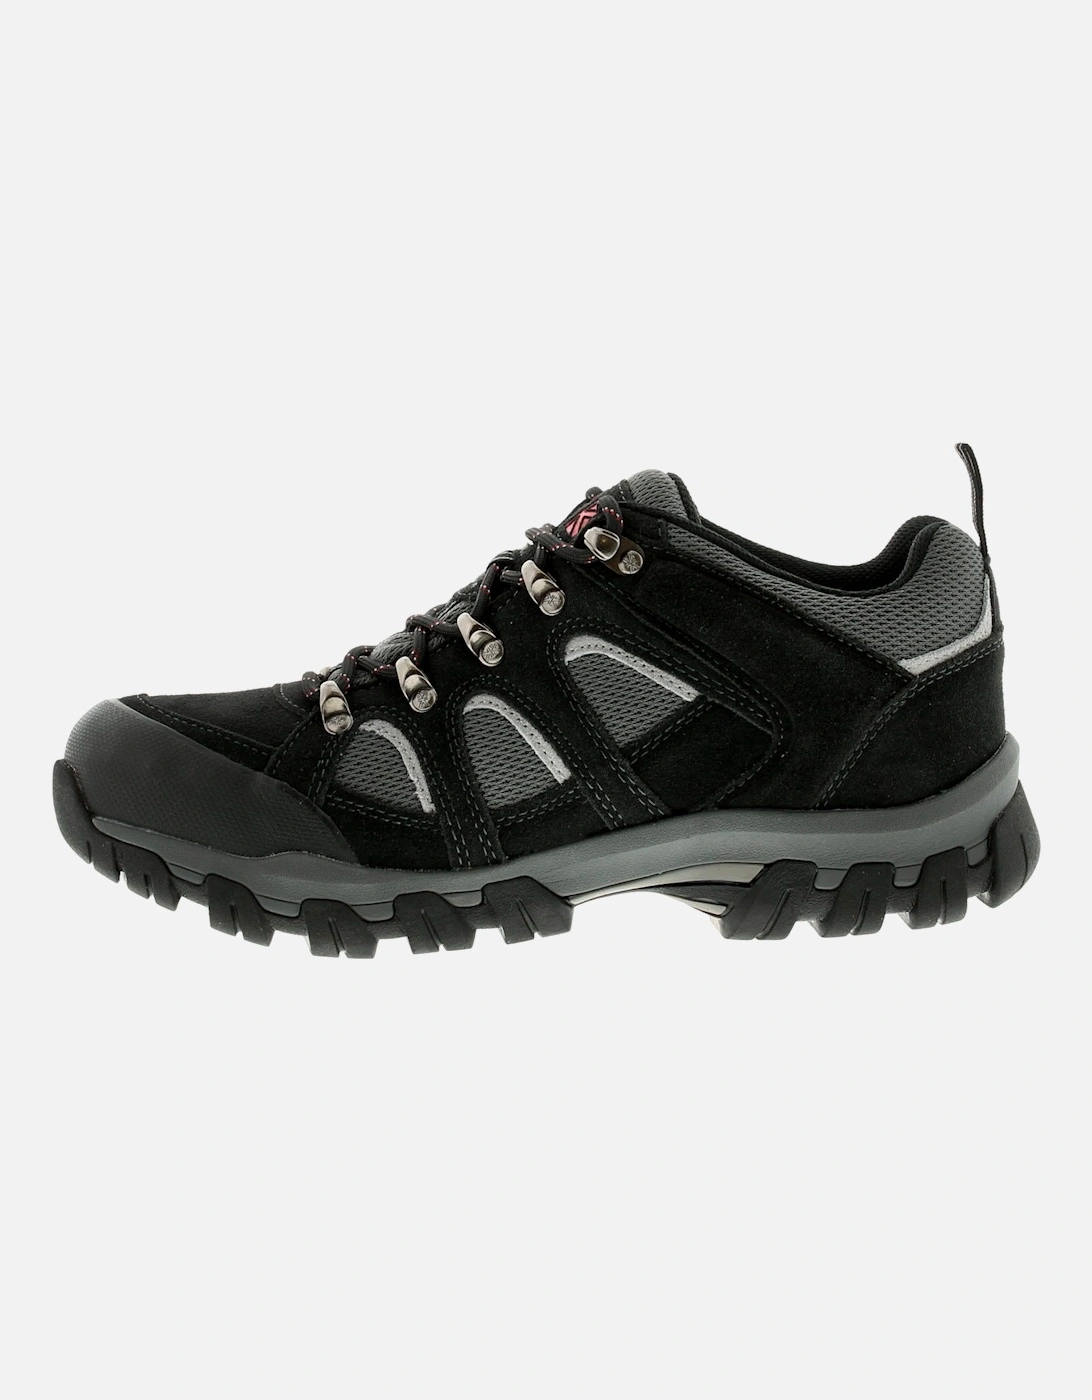 Mens Walking Boots Bodmin Low 4 Weathertite Lace Up black UK Size